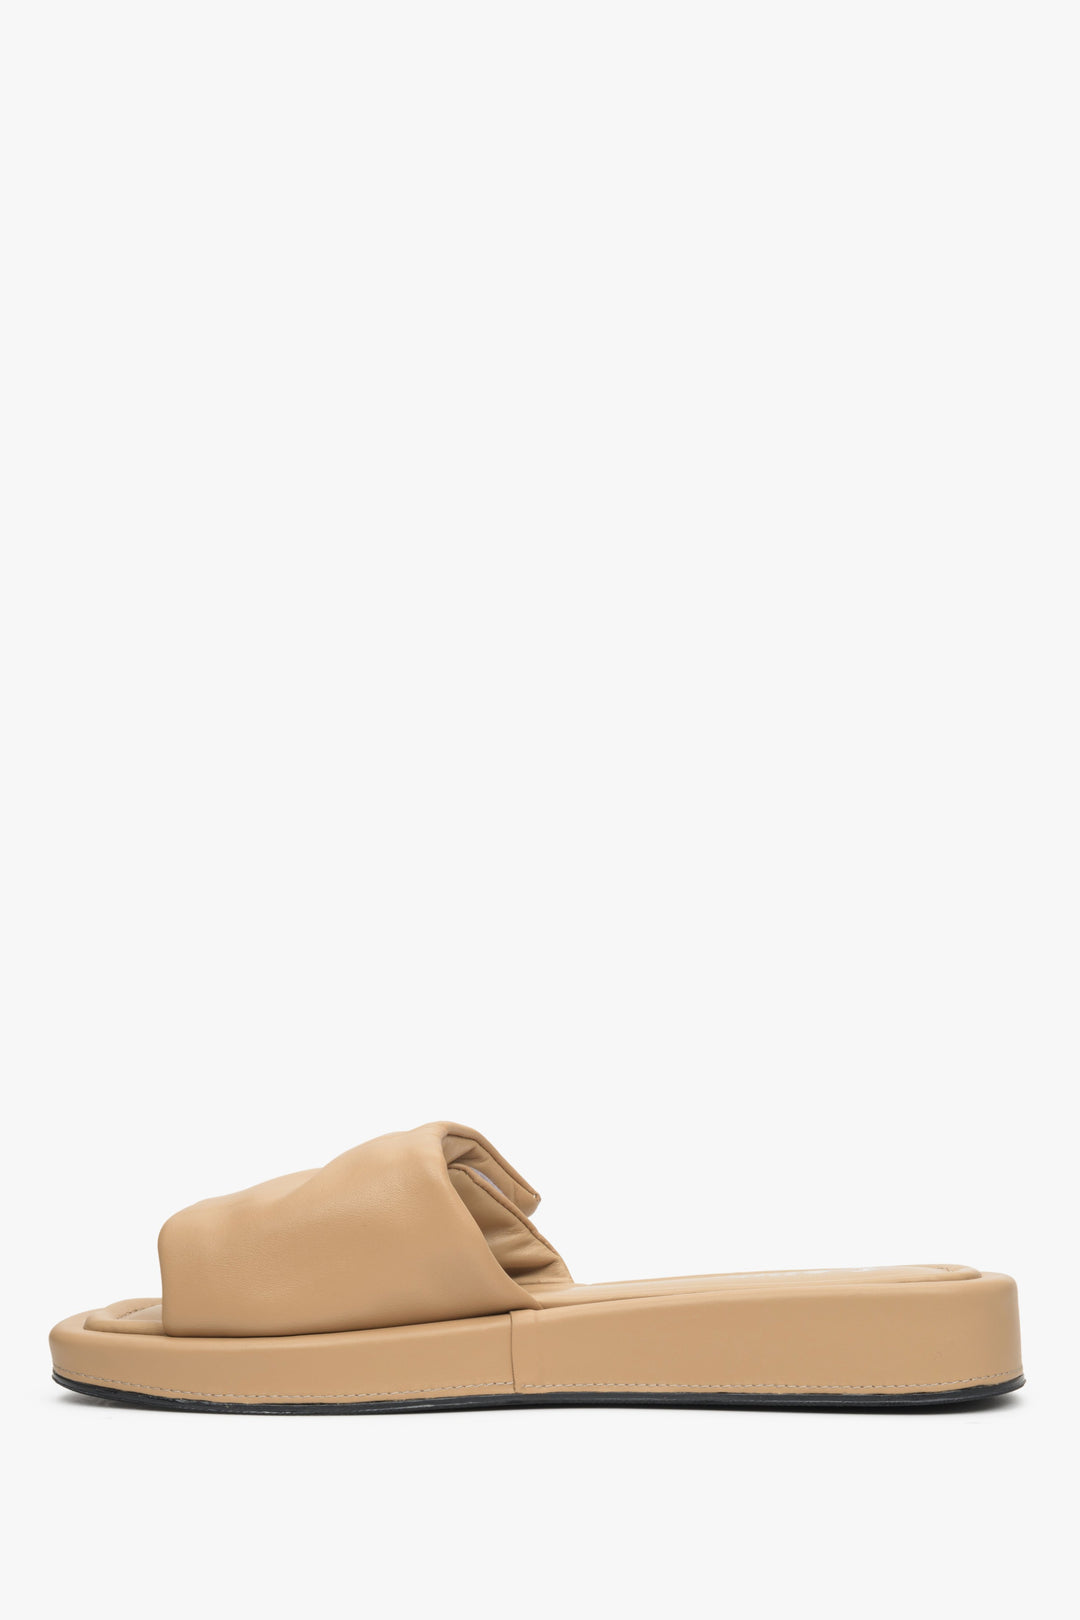 Soft slide women's sandals made of Italian leather Estro in beige colour.